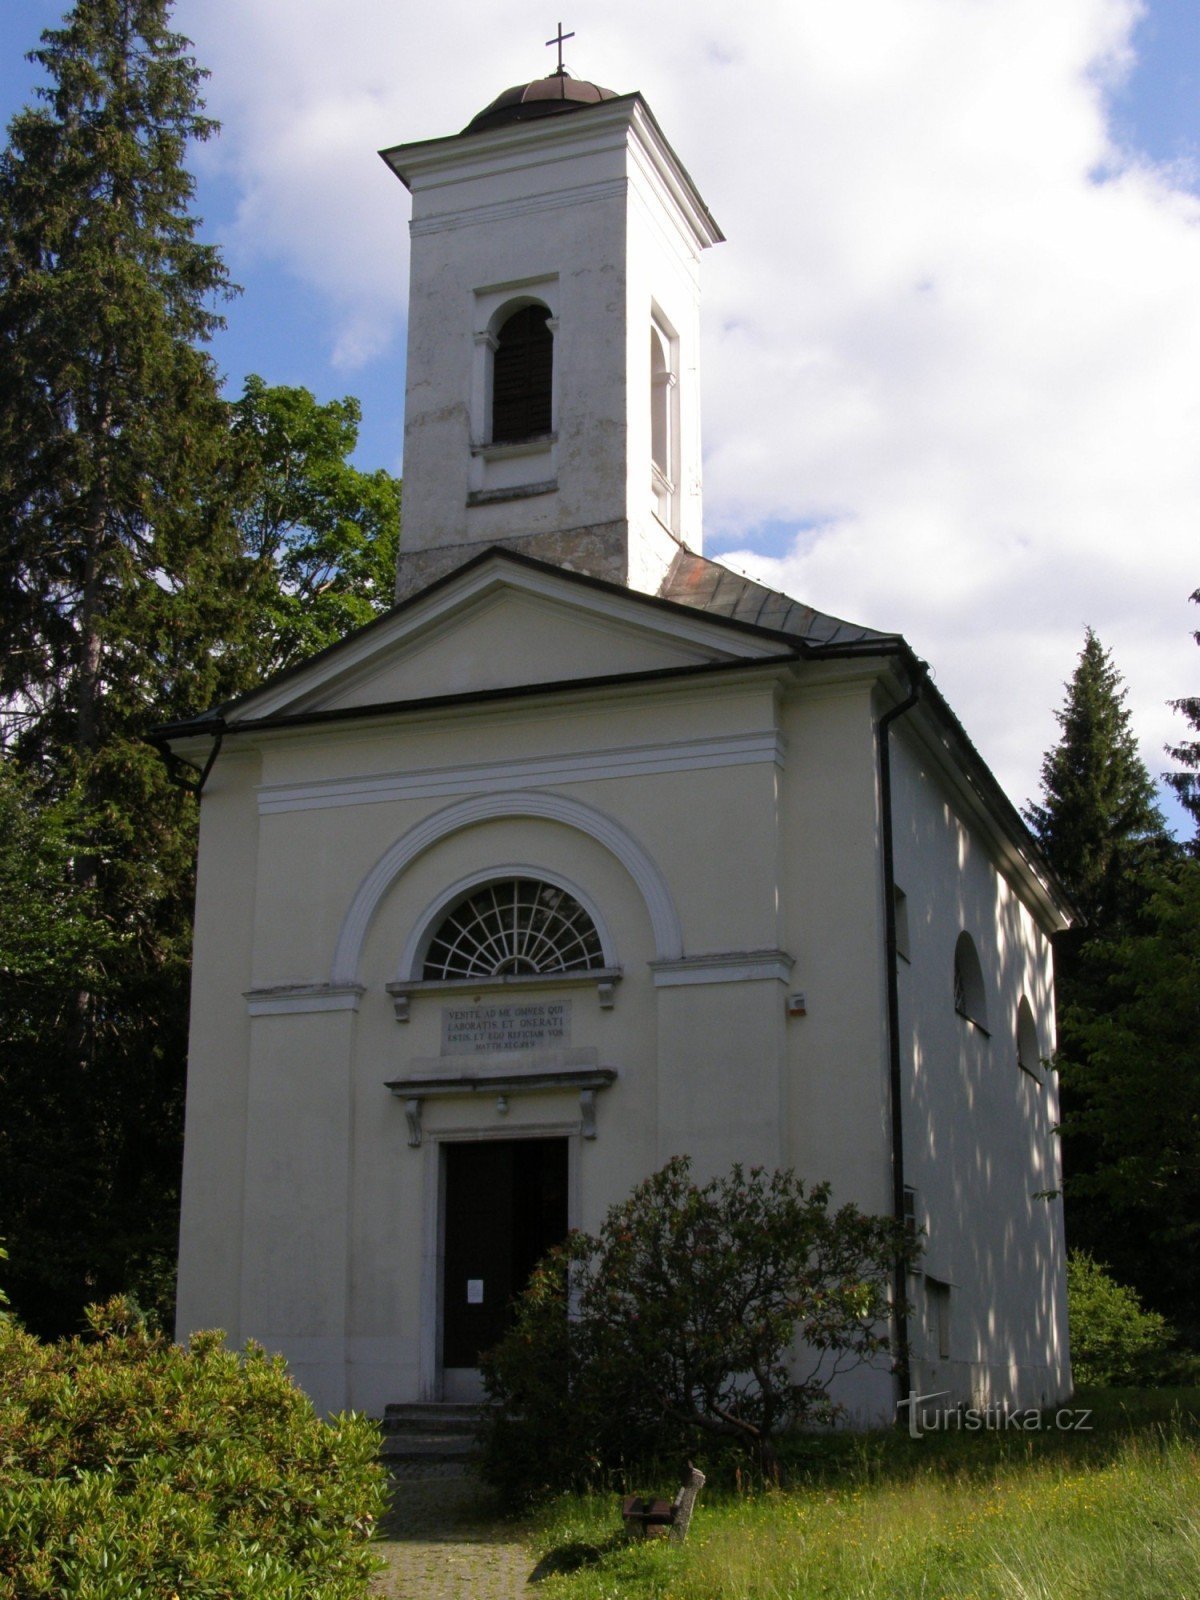 Karlova Studánka - Church of Our Lady of the Healing of the Sick